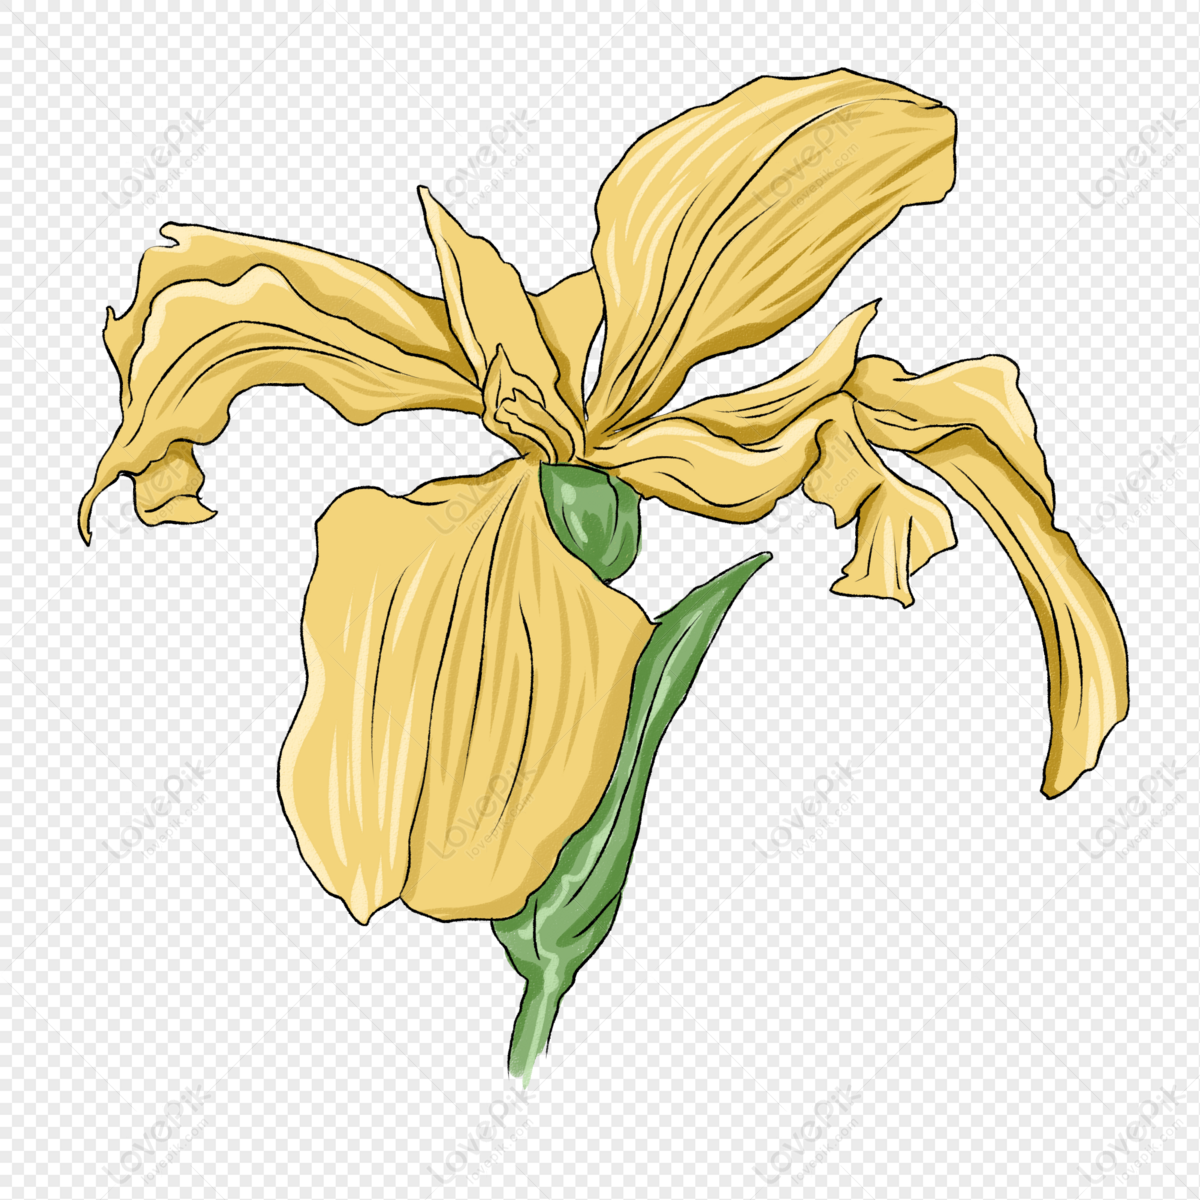 Buy Jasmine Flower SVG, Jasmine Botanical Illustration for Commercial Use,  Cut File for Cricut, Silhouette, Simple Line Art, Tattoo, Plant Online in  India - Etsy